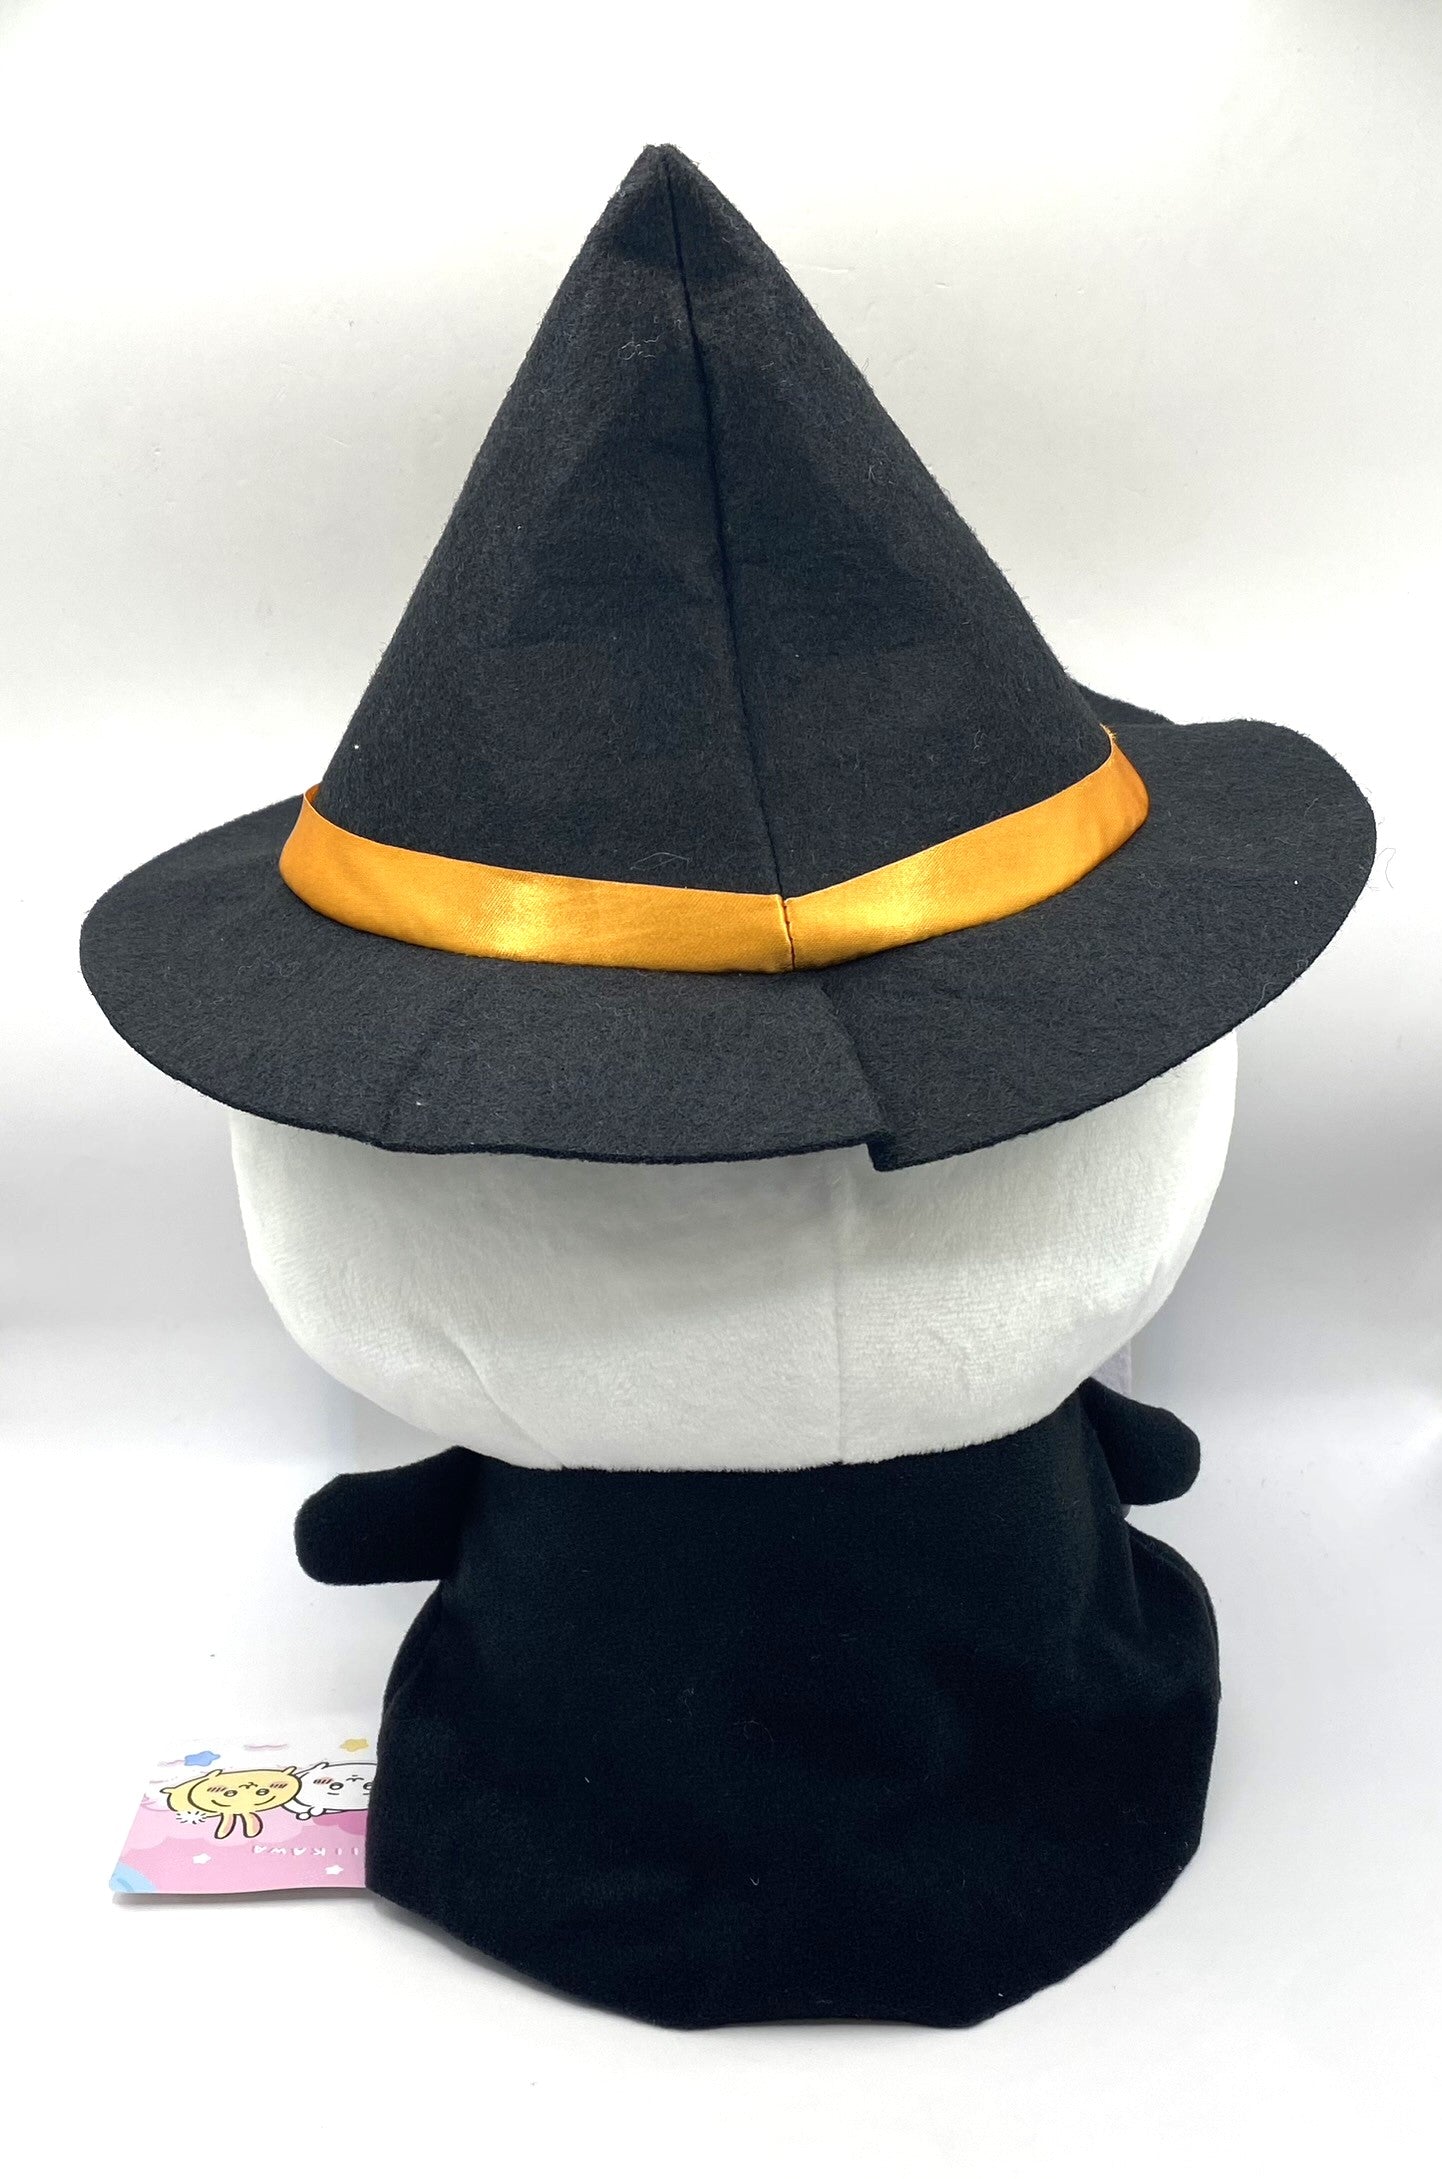 Chiikawa Halloween Boo Witch BIG Plush Soft Toy 30cm